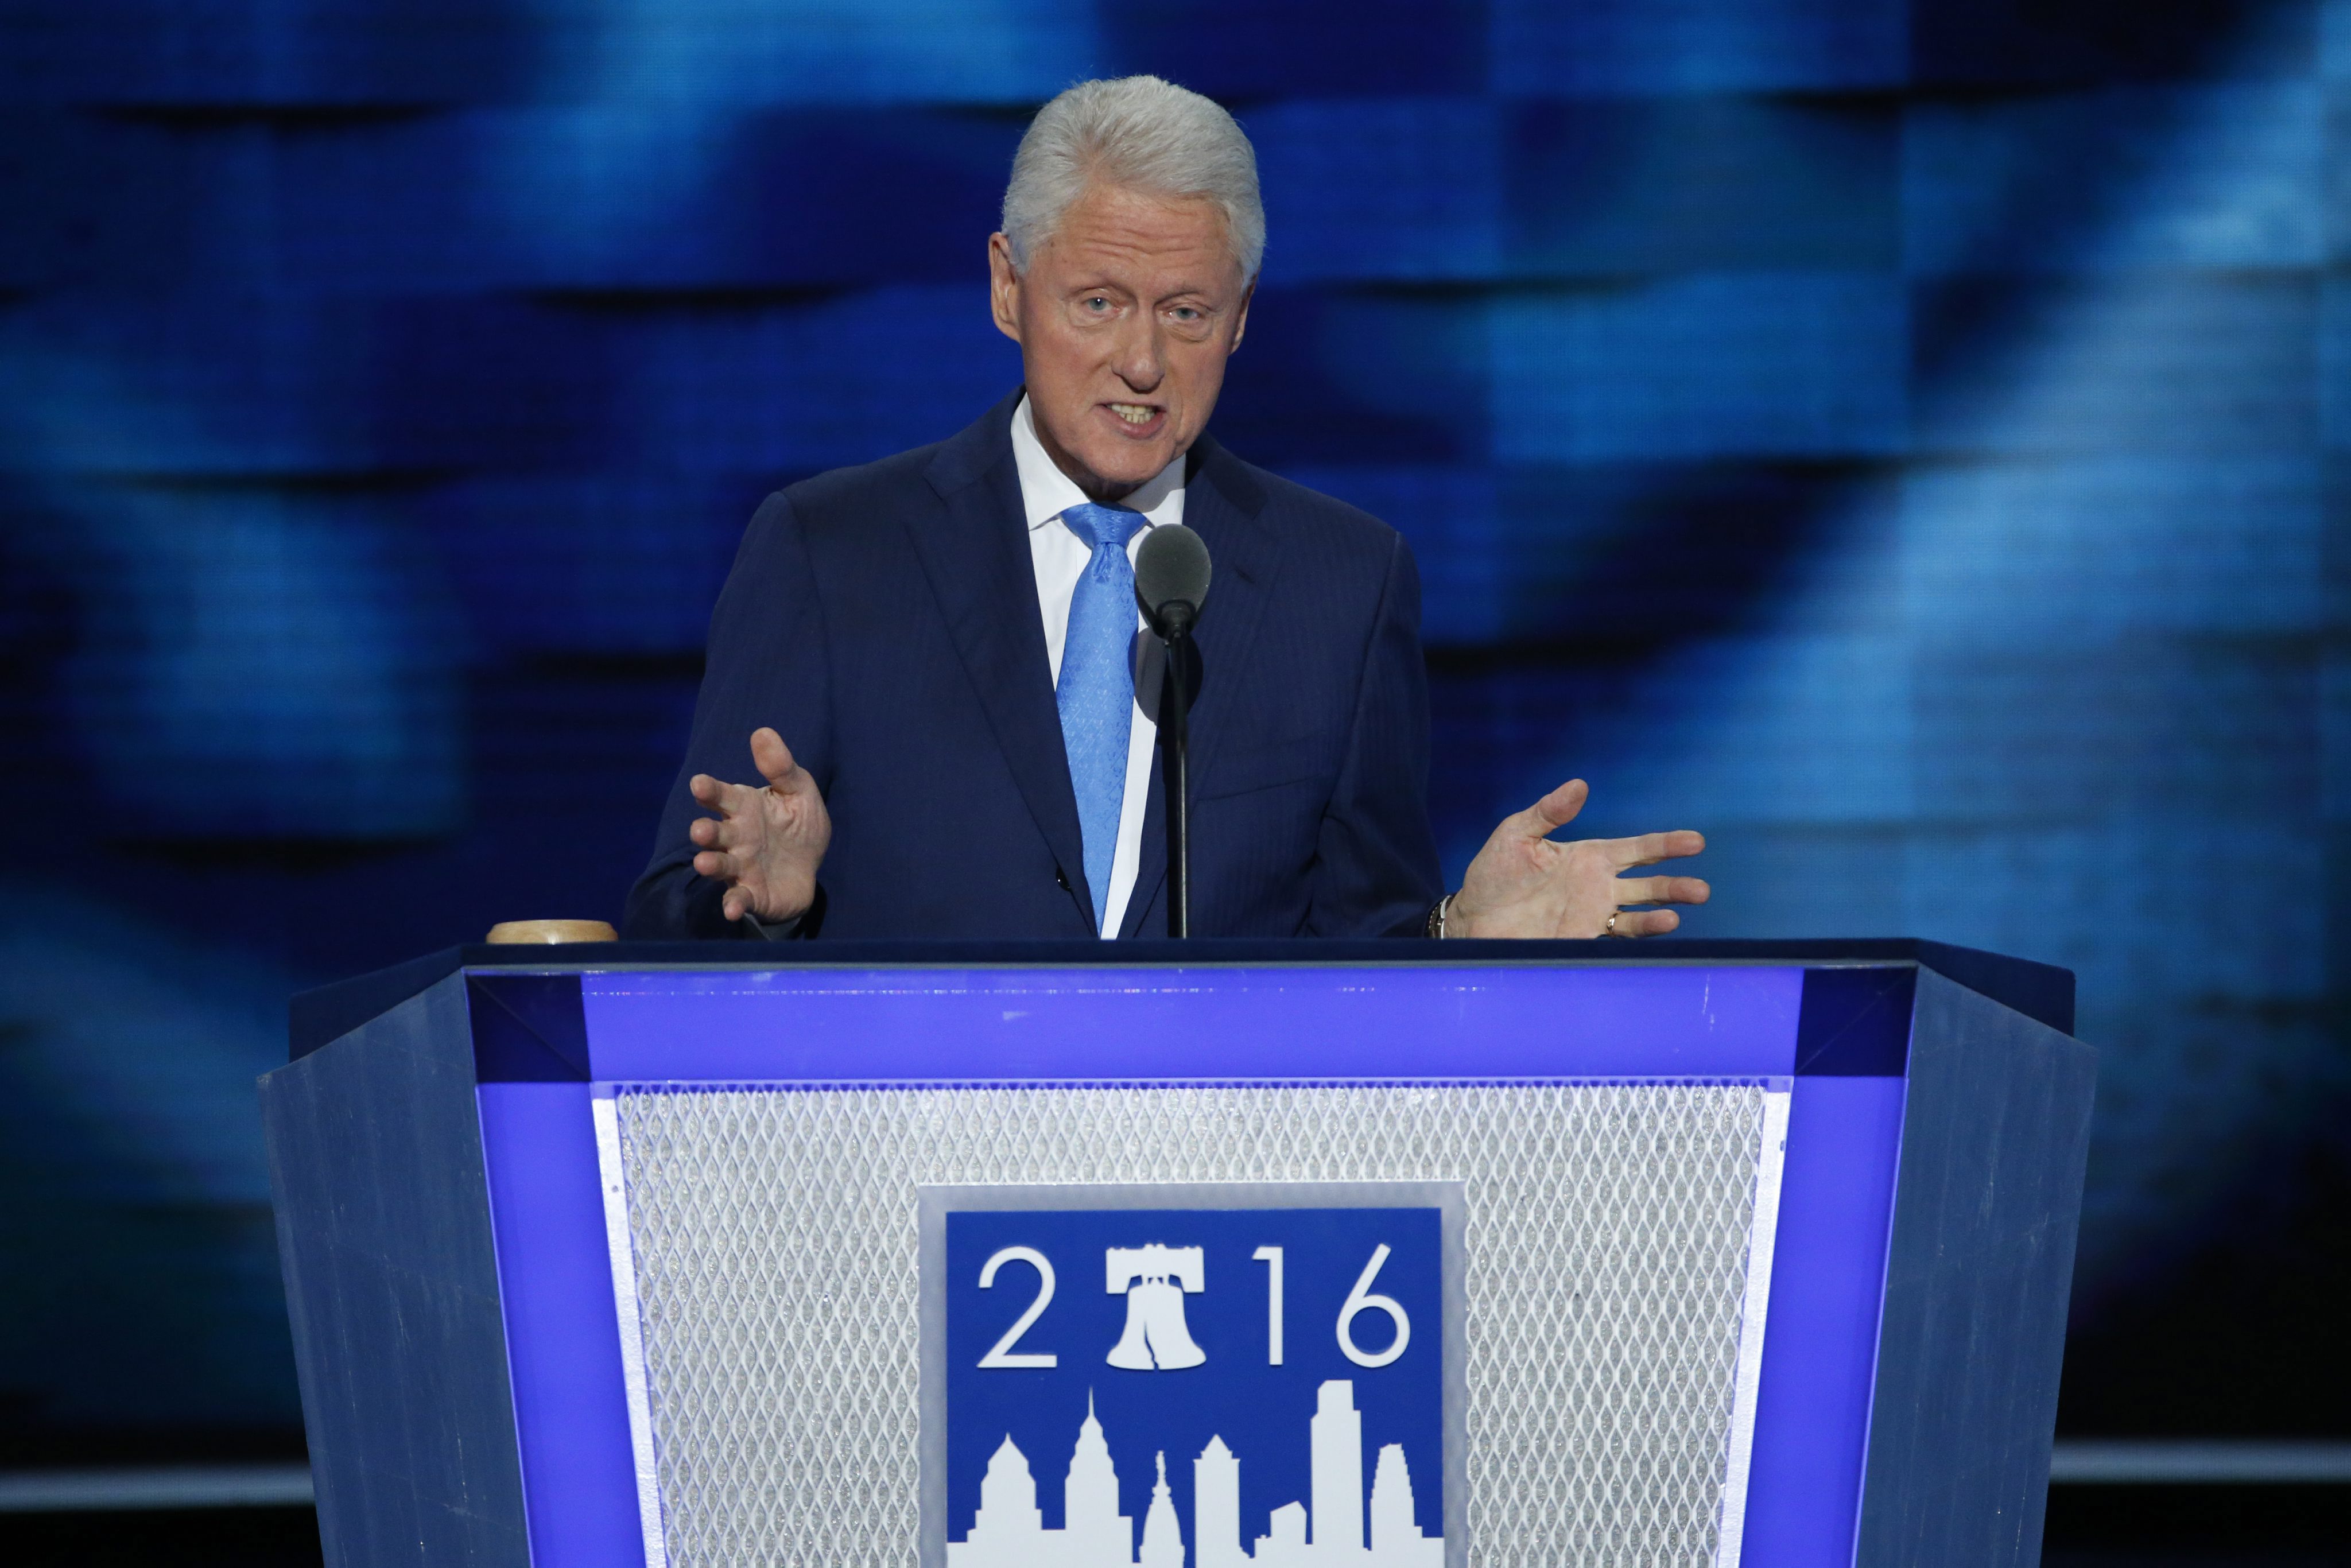 Internan a expresidente Bill Clinton por infección “no relacionada al Covid-19”